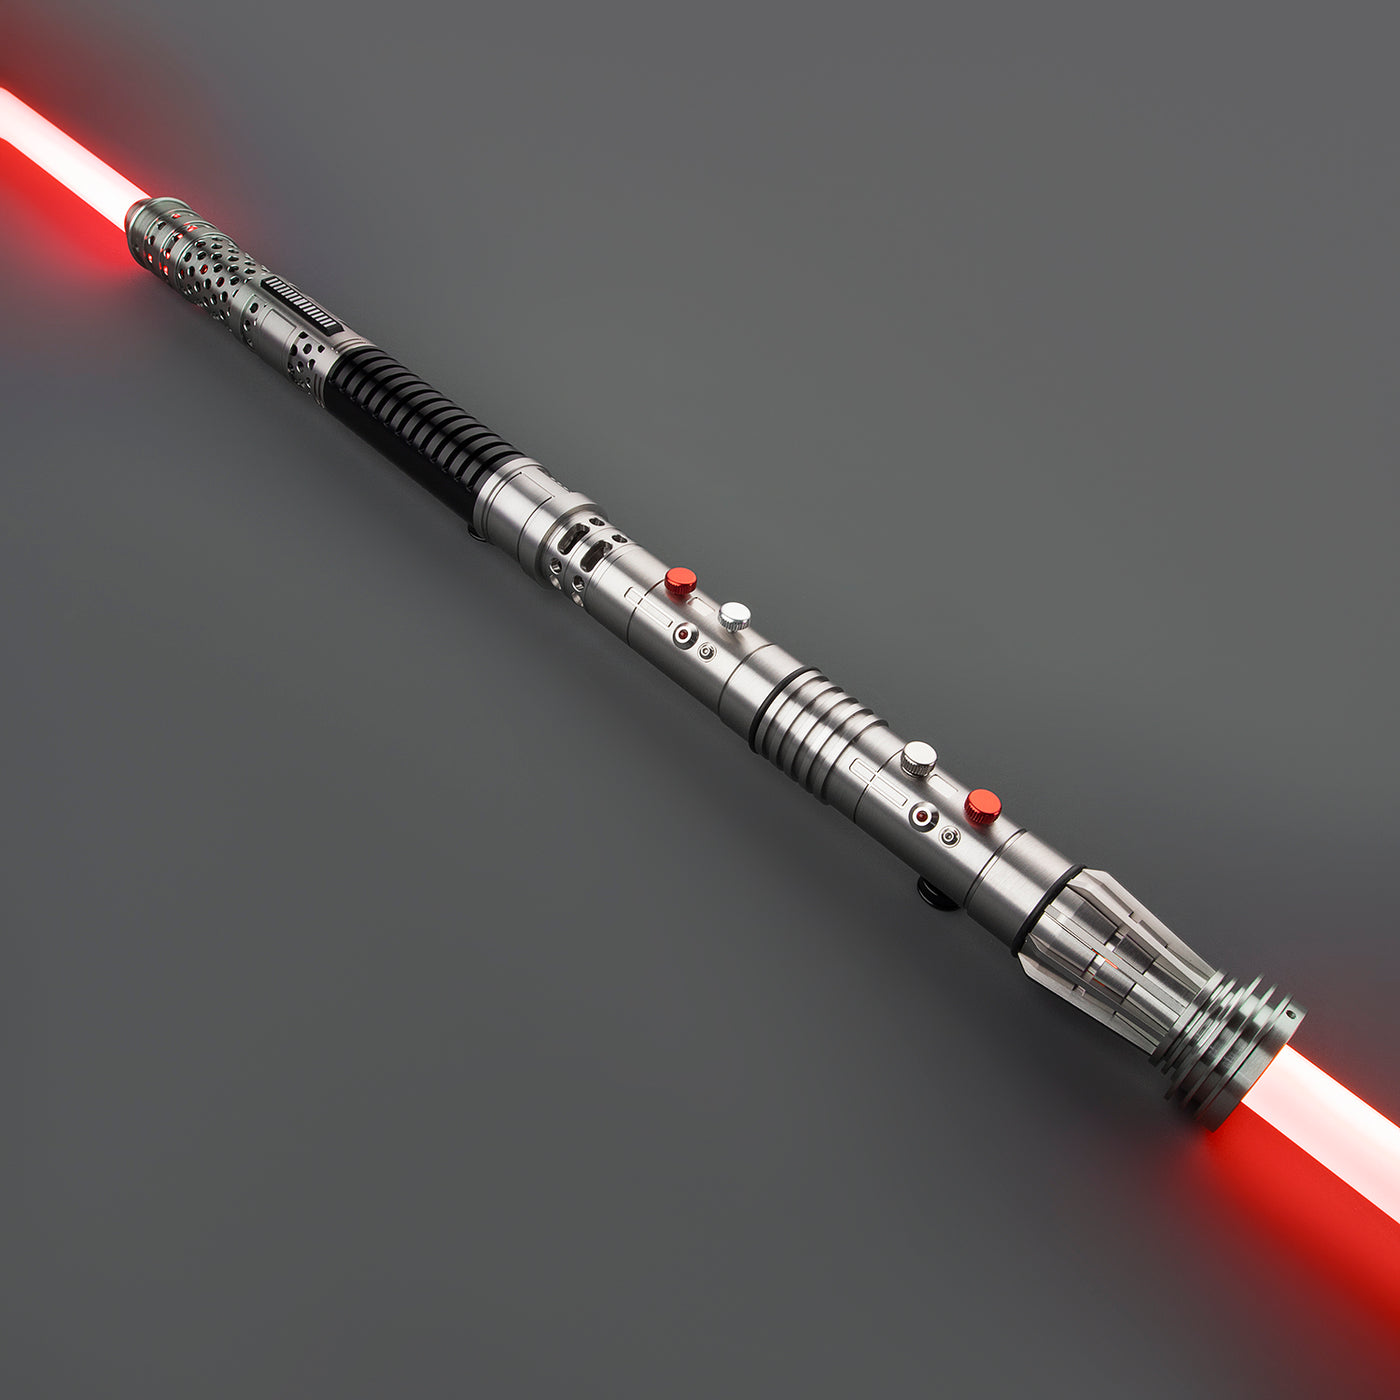 Hybrid Saberstaff - KenJo Sabers - Star Wars Lightsaber replica Jedi Sith - Best sabershop Europe - Nederland light sabers kopen -